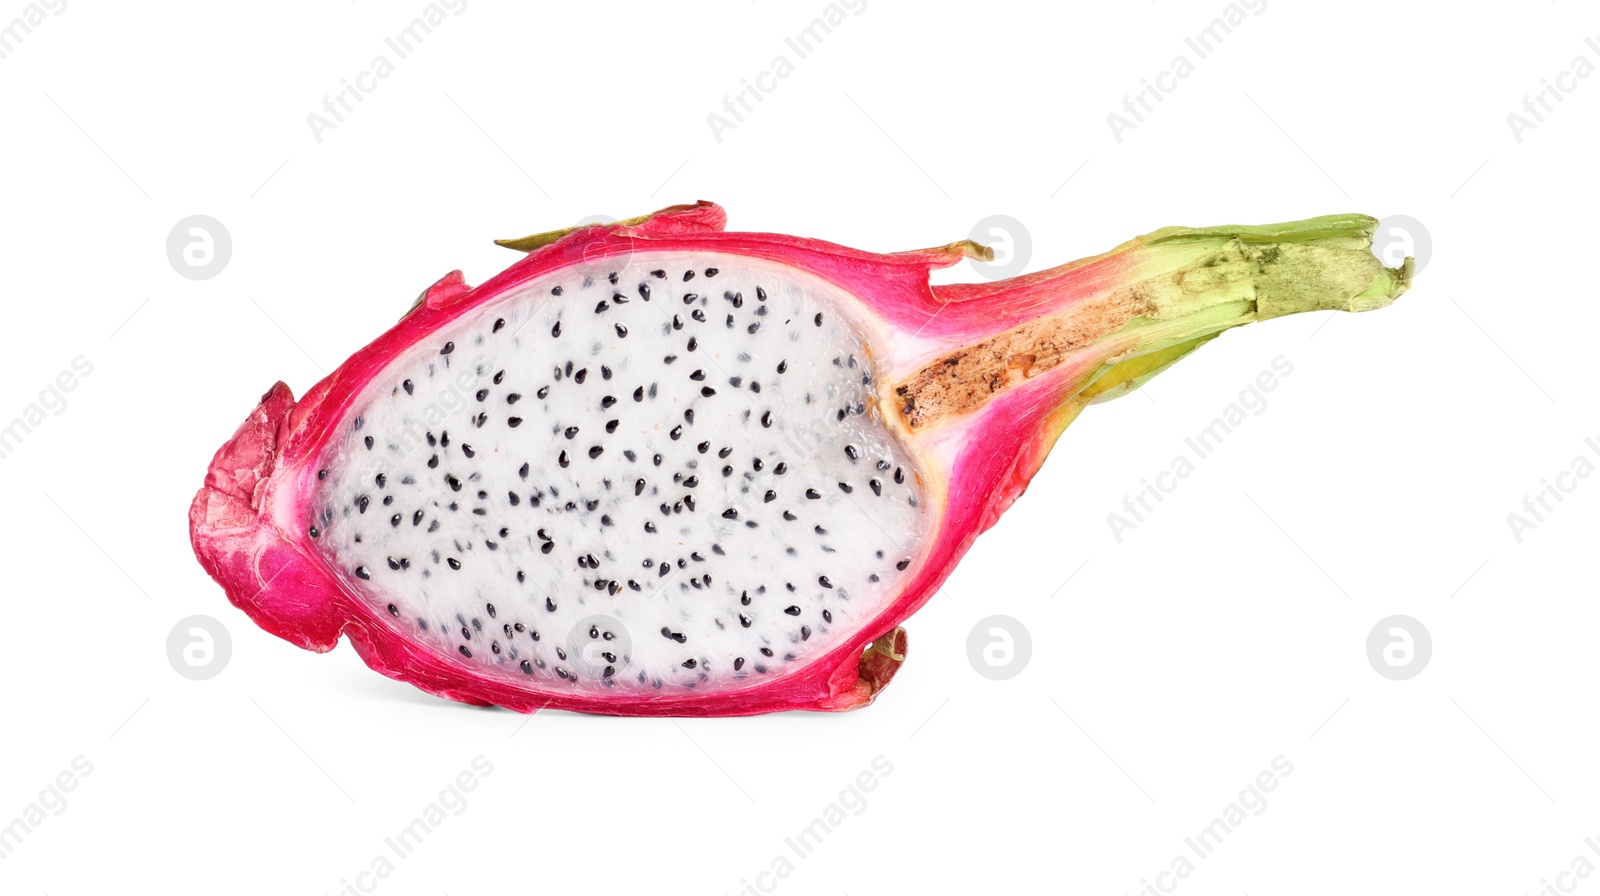 Photo of Half of exotic dragon fruit isolated on white